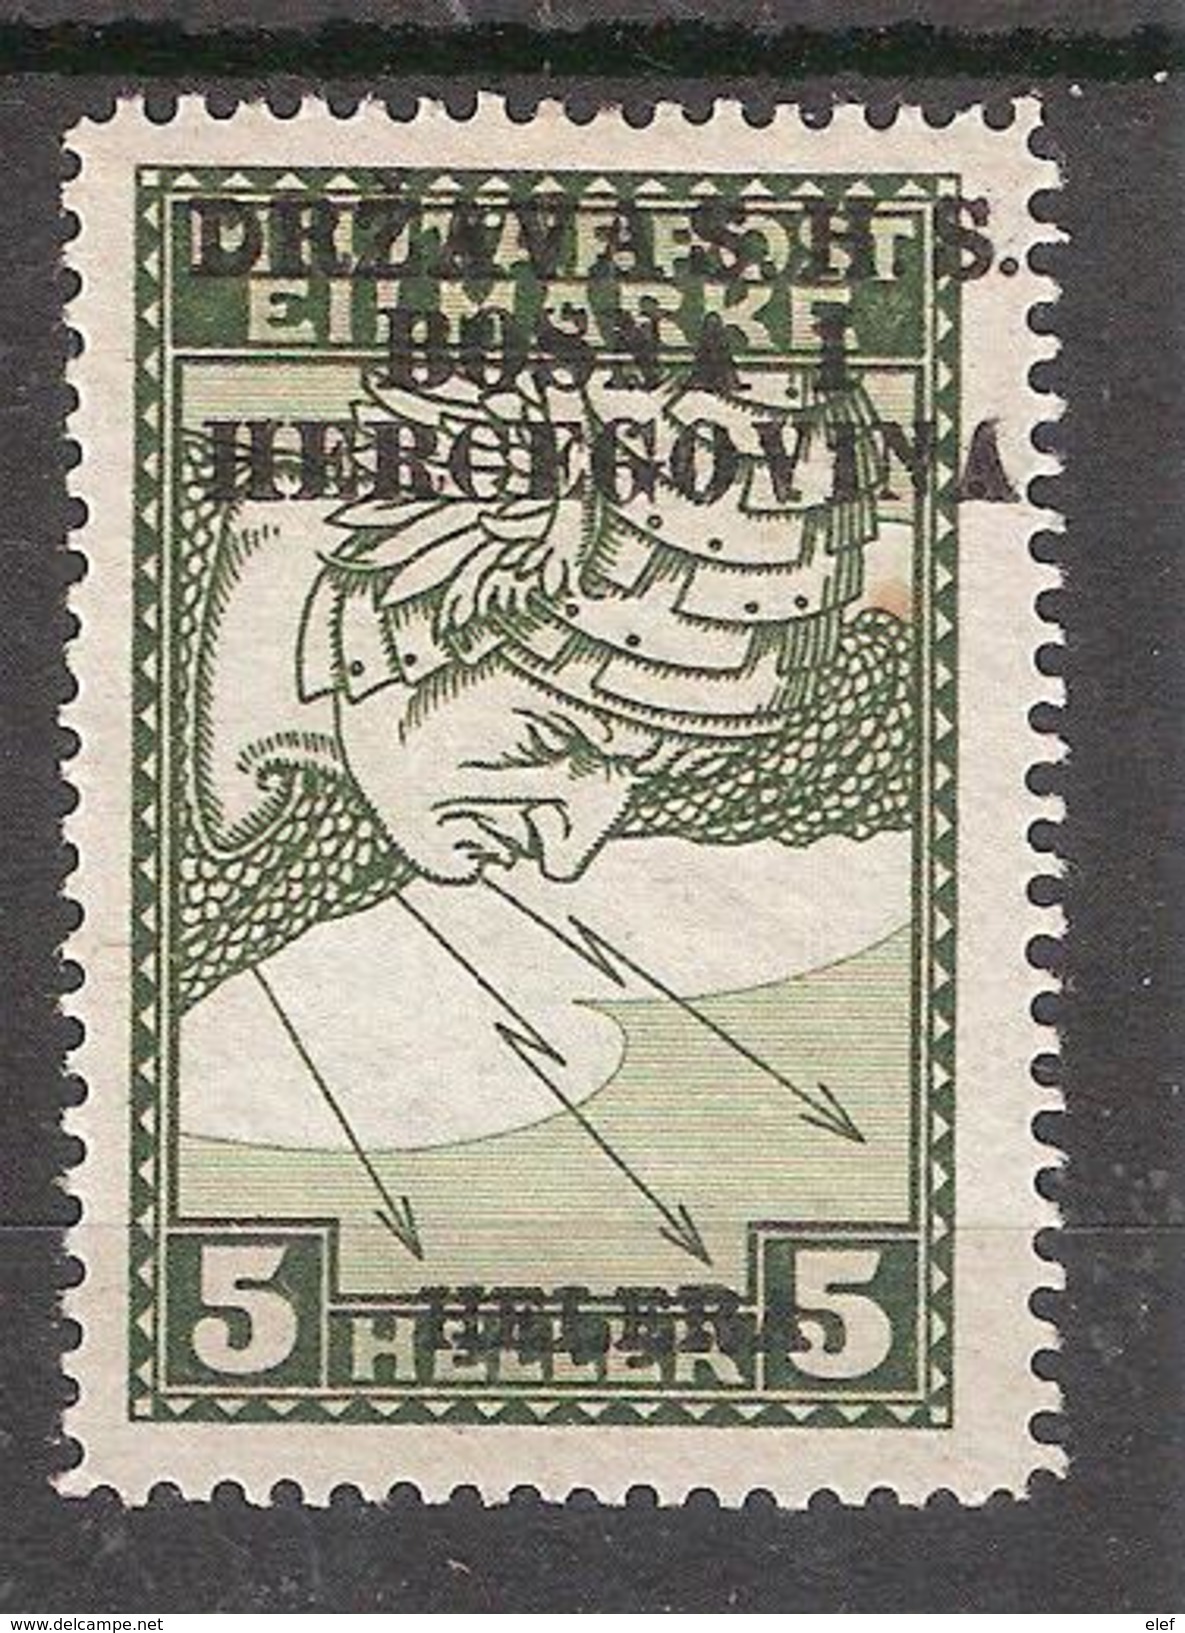 Jugoslavia / Yougoslavie 1919, JOURNAUX N° 4 , 5 Heller Vert Olive Surchargé Bosna Hercegovina, Neuf * / MH, TB - Newspaper Stamps